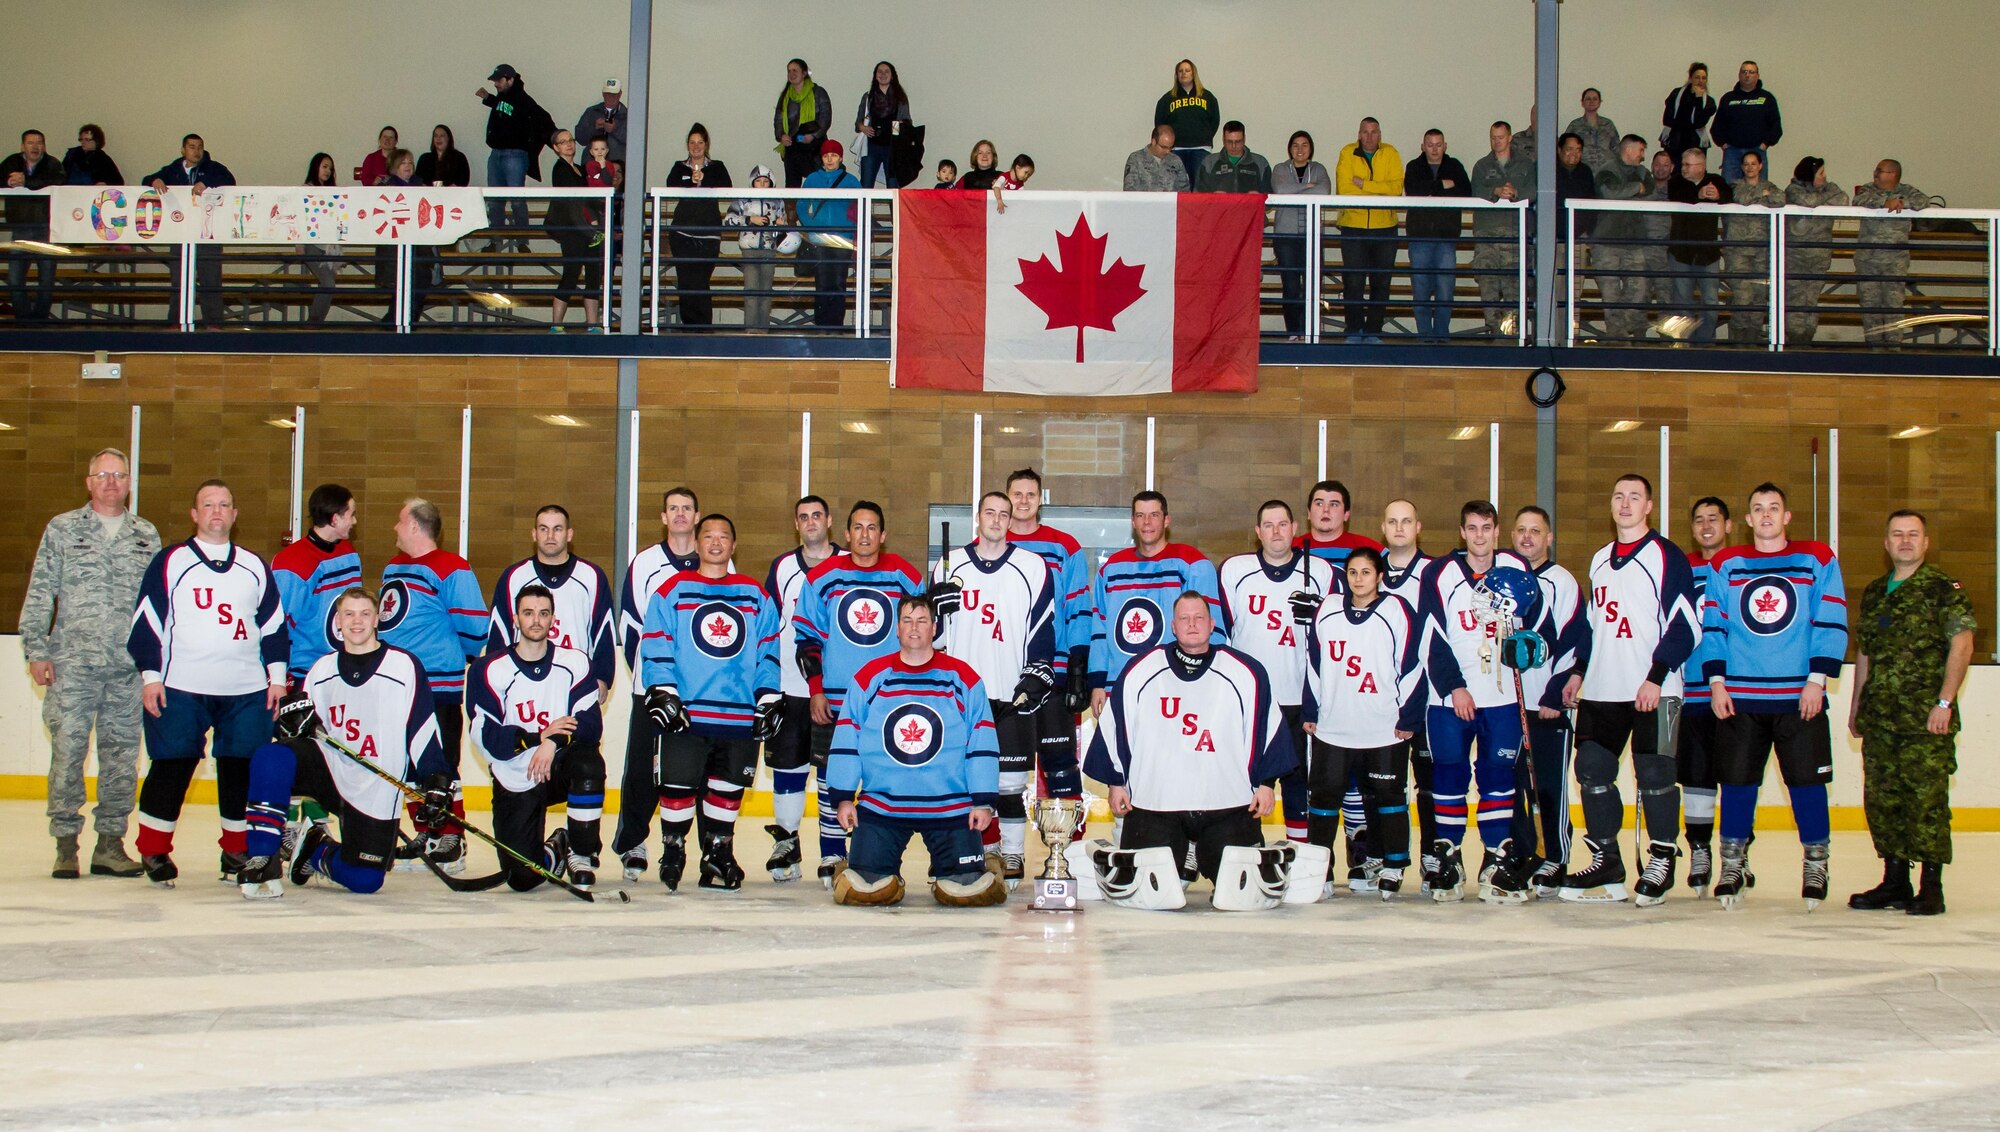 Canada wins 4-3 over US at the 22nd annual Canuck USA Hockey Classic. Canadian Team members include Capt. Sebastien Maheu #1, Brain Kynaston #2, Marcelo Plada #3, Bandon Berkman #4, Lt. Col. Kevin Ng #5, Brig. Gen. Dany Fortin #6, Capt. Jack Nguyen #11, Curtis Berkman #12, Brian Berkman #16, Capt. Denis Dorion #69.  US team members include Staff Sgt. Jennifer SonSon #1, Aaron Andrews #2, Nick Wysong #3, Senior Master Sgt. Gregg Bailey #4, Master Sgt. Mike Delany #5, Major Wayne Oman #6, Capt. Jason Muller #7, Senior Airman Bryan Bein #9, Tech. Sgt. James Bandy #10, Airman 1st Class Shane Key #11, Tech. Sgt. Chris Pavel #12, Tech. Sgt. Matt Berube #13, Senior Master Sgt. John Austin #14, Master Sgt. Ty Henrichsmeger #29. (Courtesy photo by Conrad Neumann III)